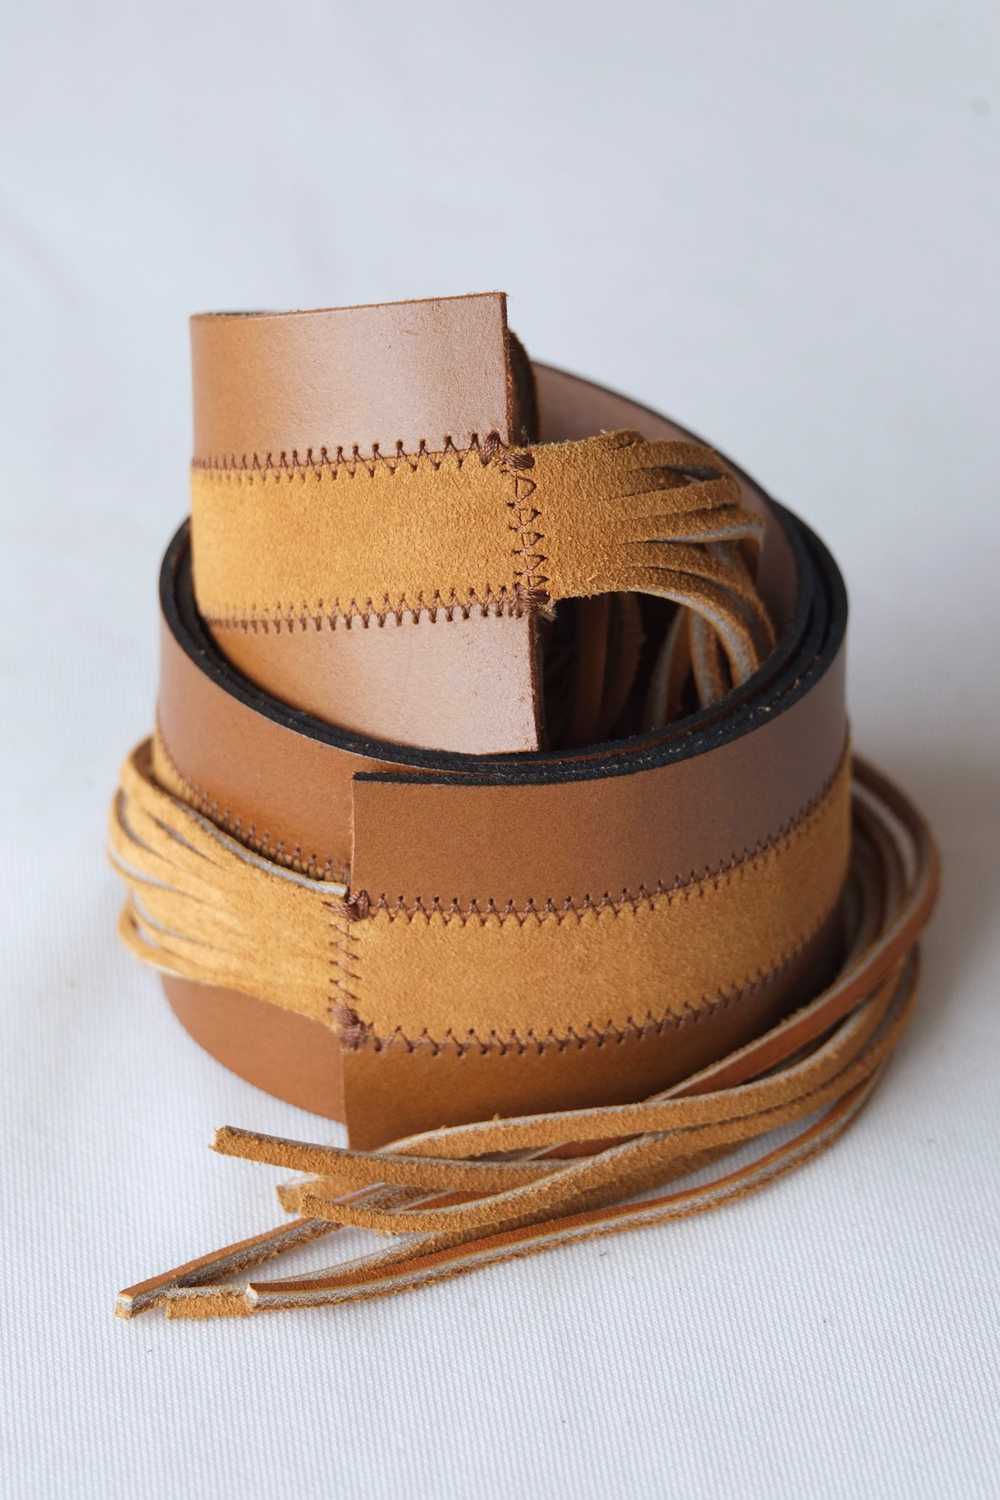 L'AIGLON Leather & Suede Tassels Belt - image 5